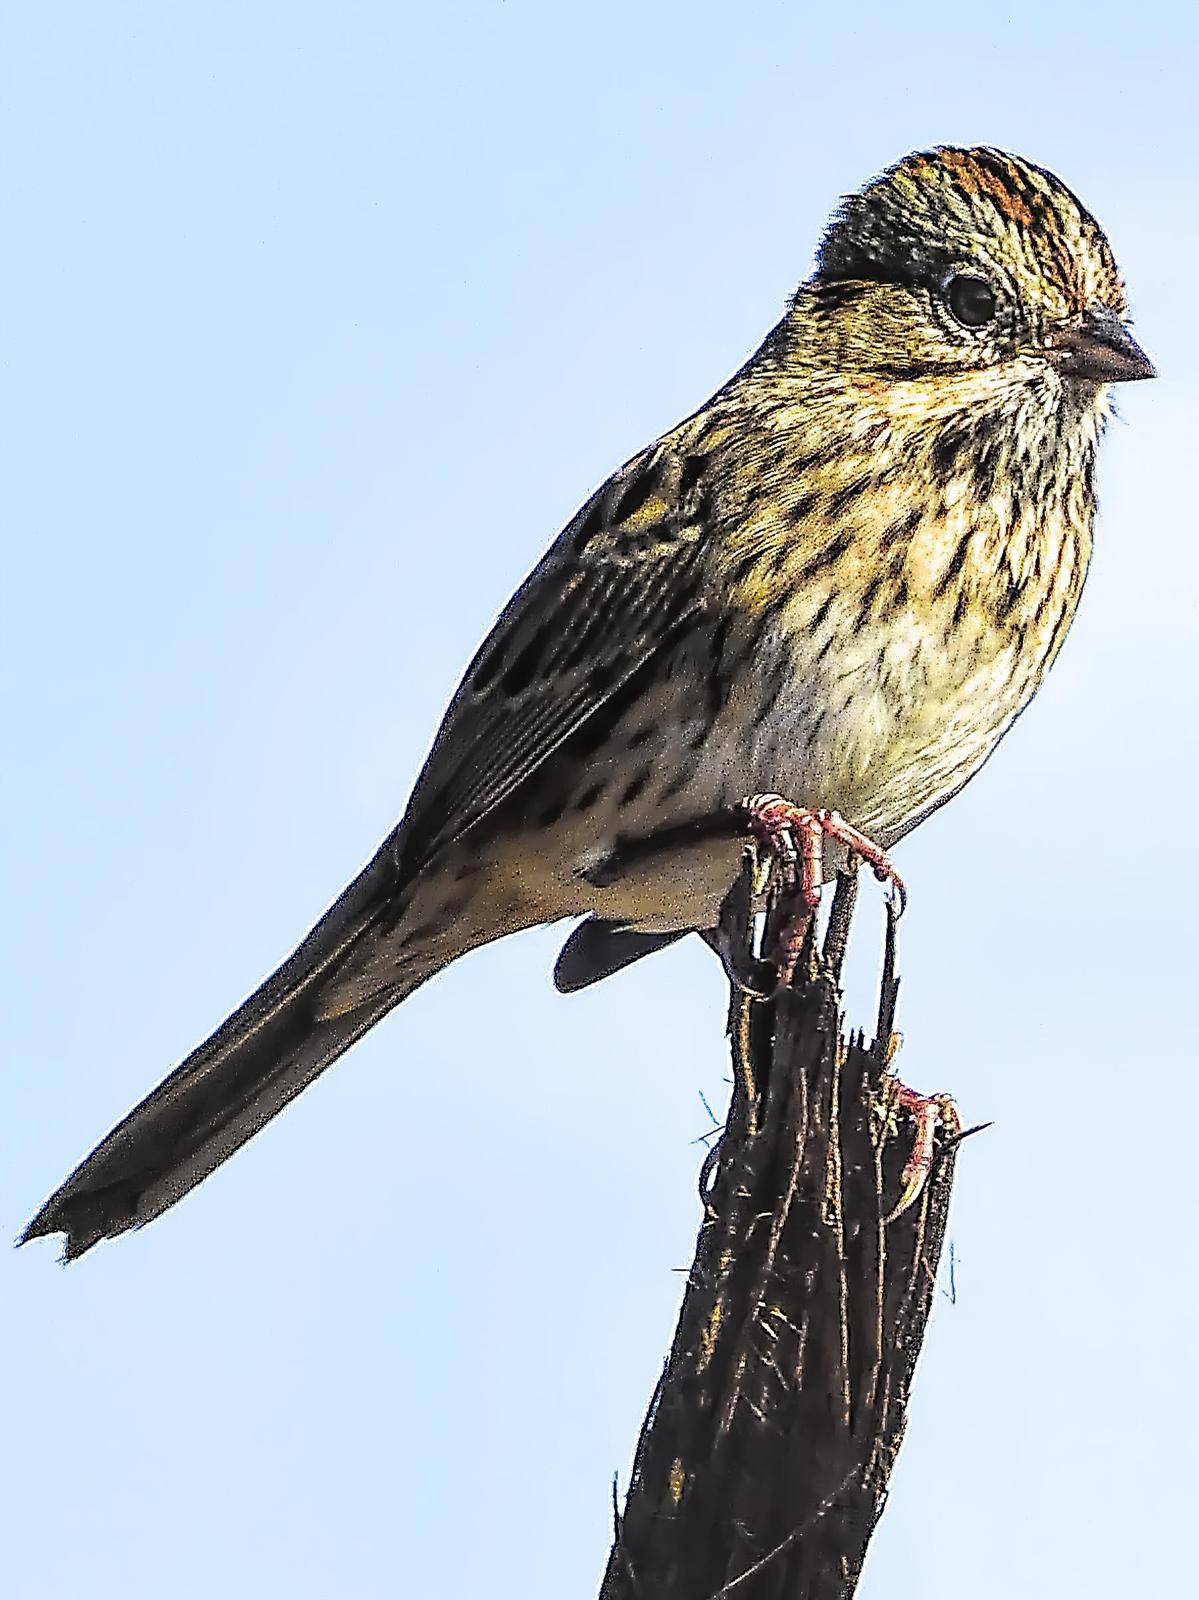 Lincoln's Sparrow Photo by Dan Tallman